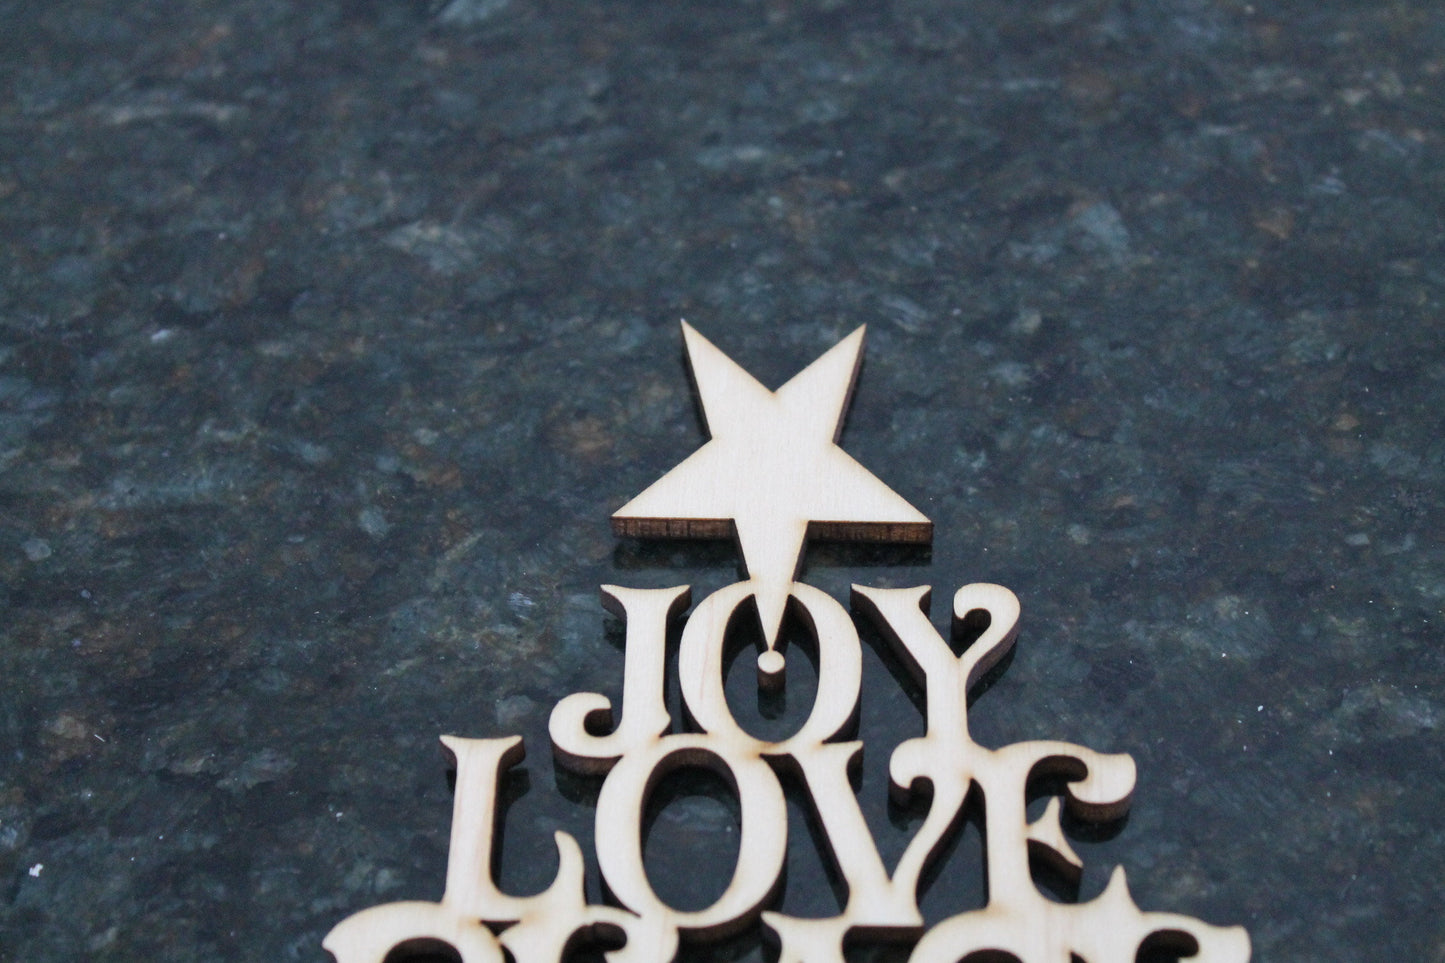 Joy, Love, Peace, Believe, Christmas Tree, Christmas Word Cut Out, Christmas Tree Laser Cutout, DIY, Wood, Silhouette, Craft, Decor, Birch